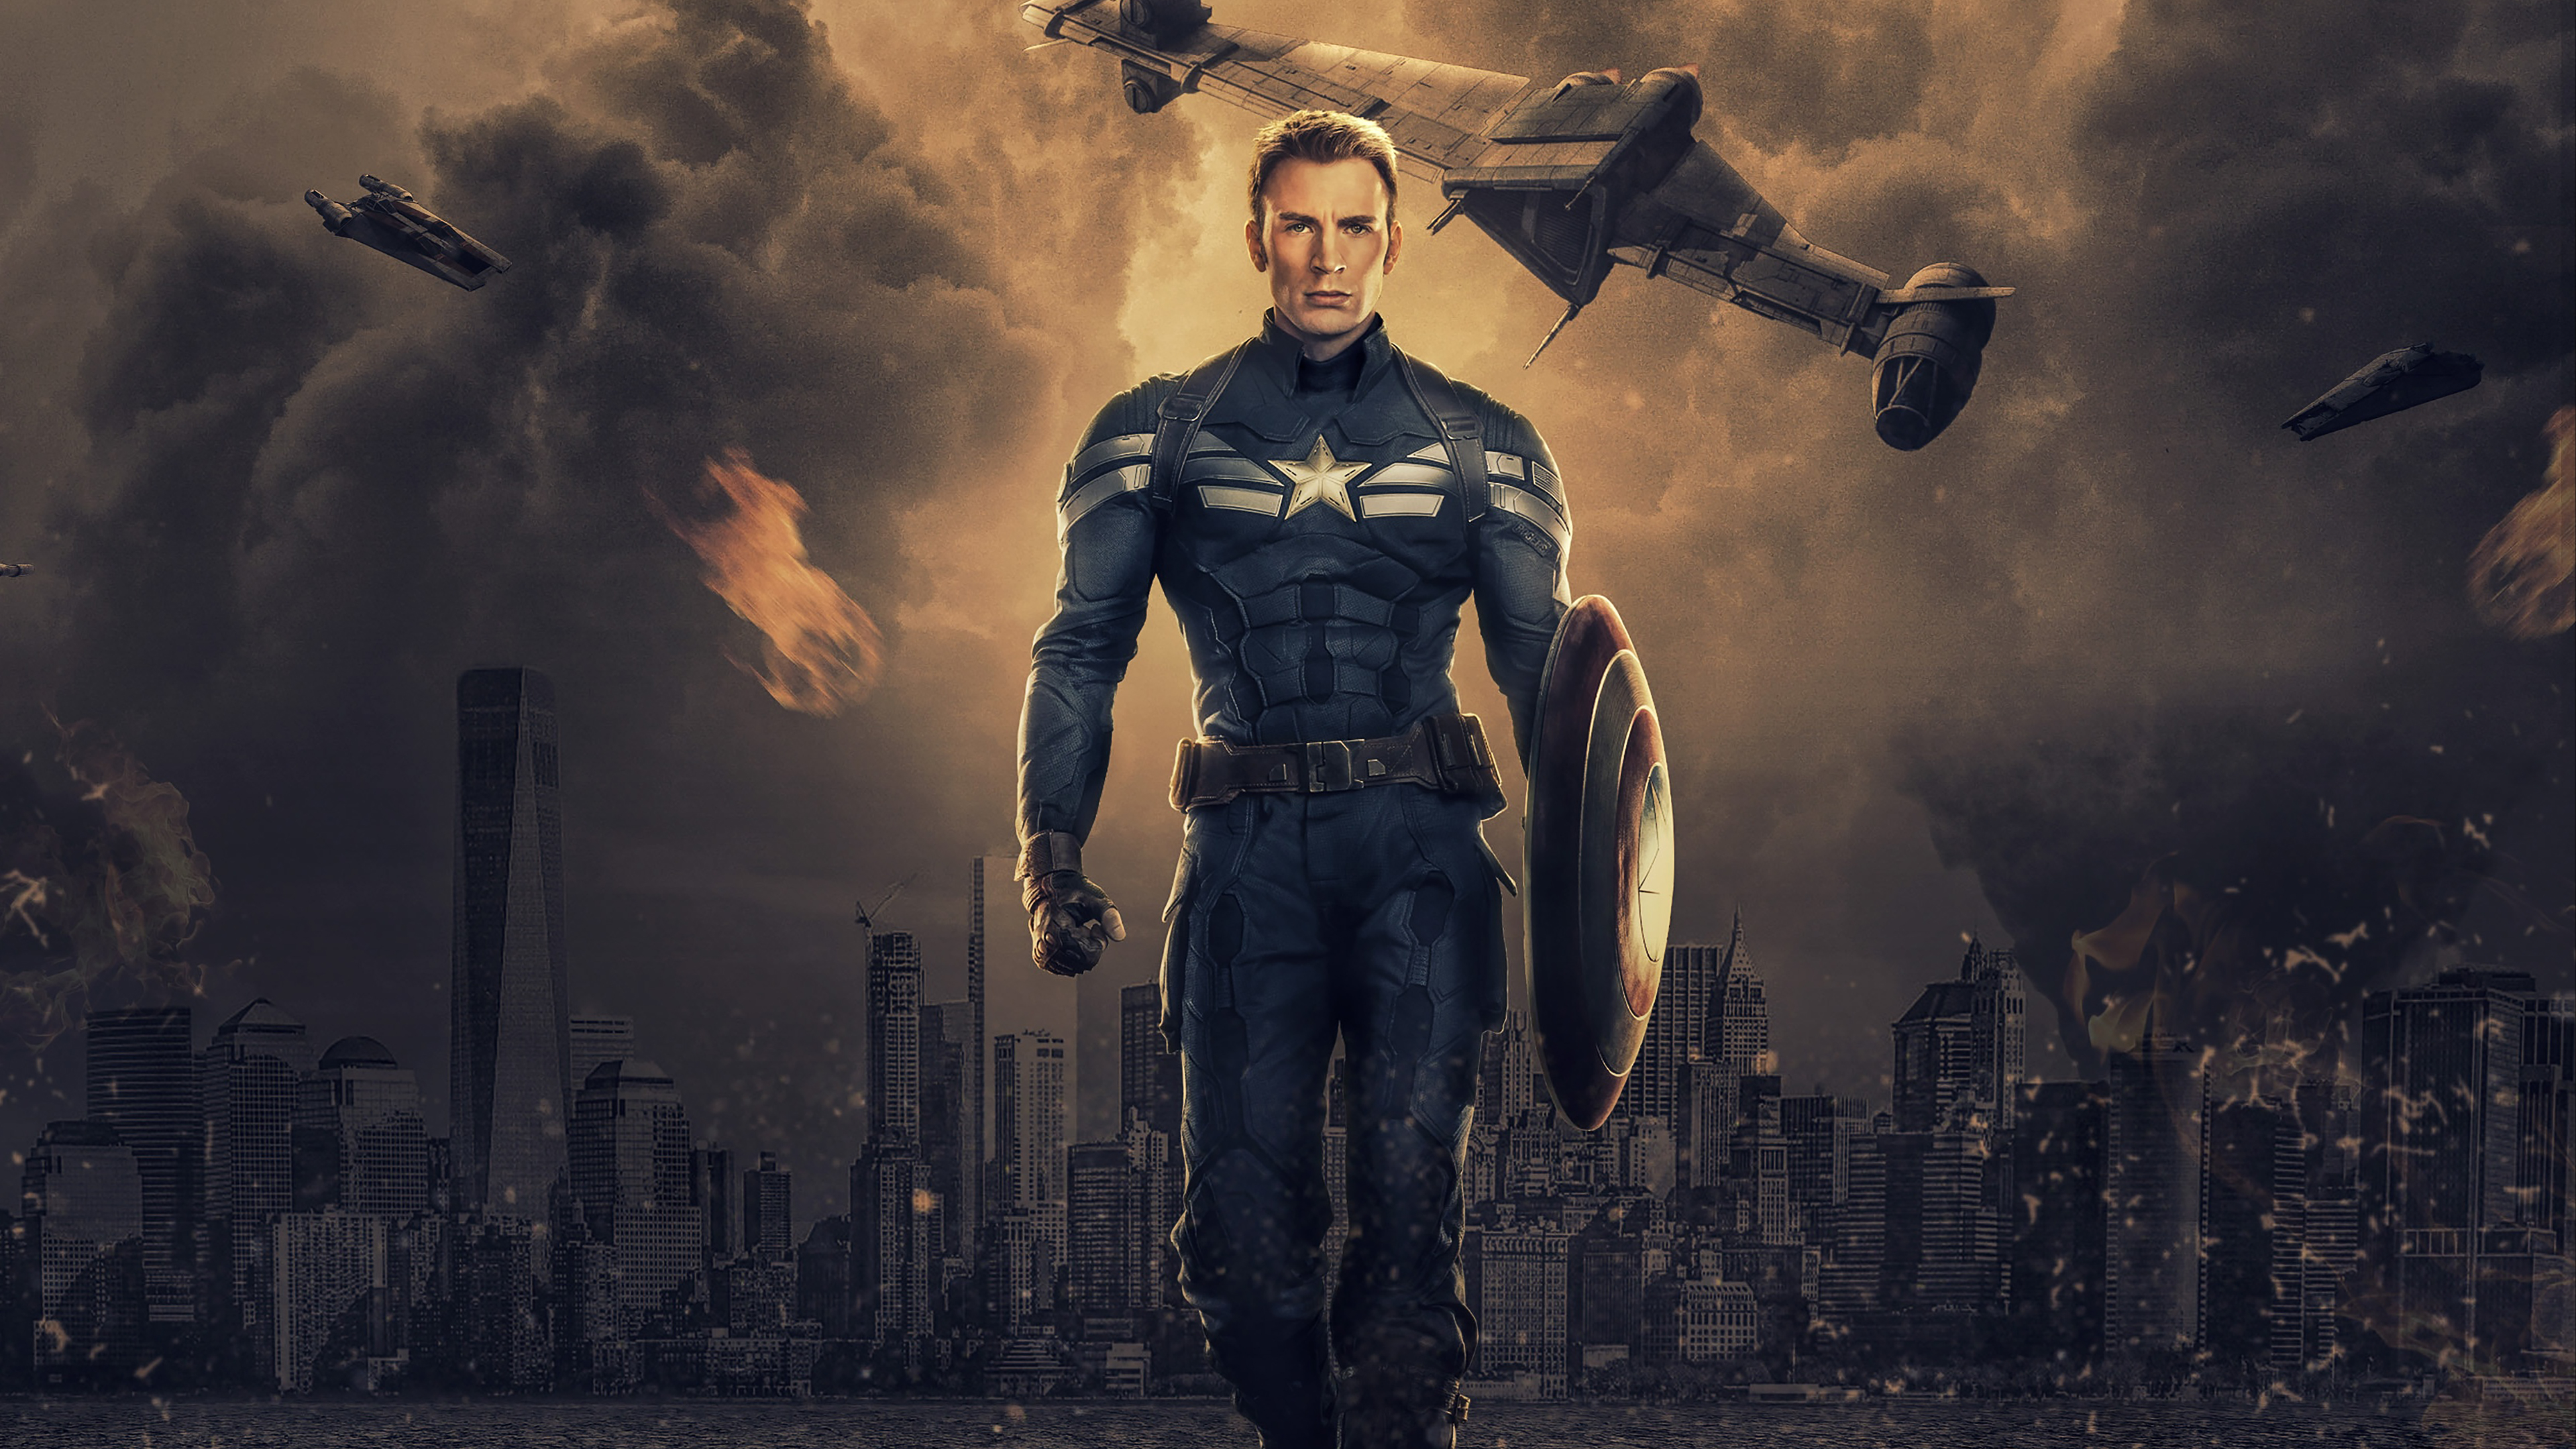 Chris Evans as Captain America 4K